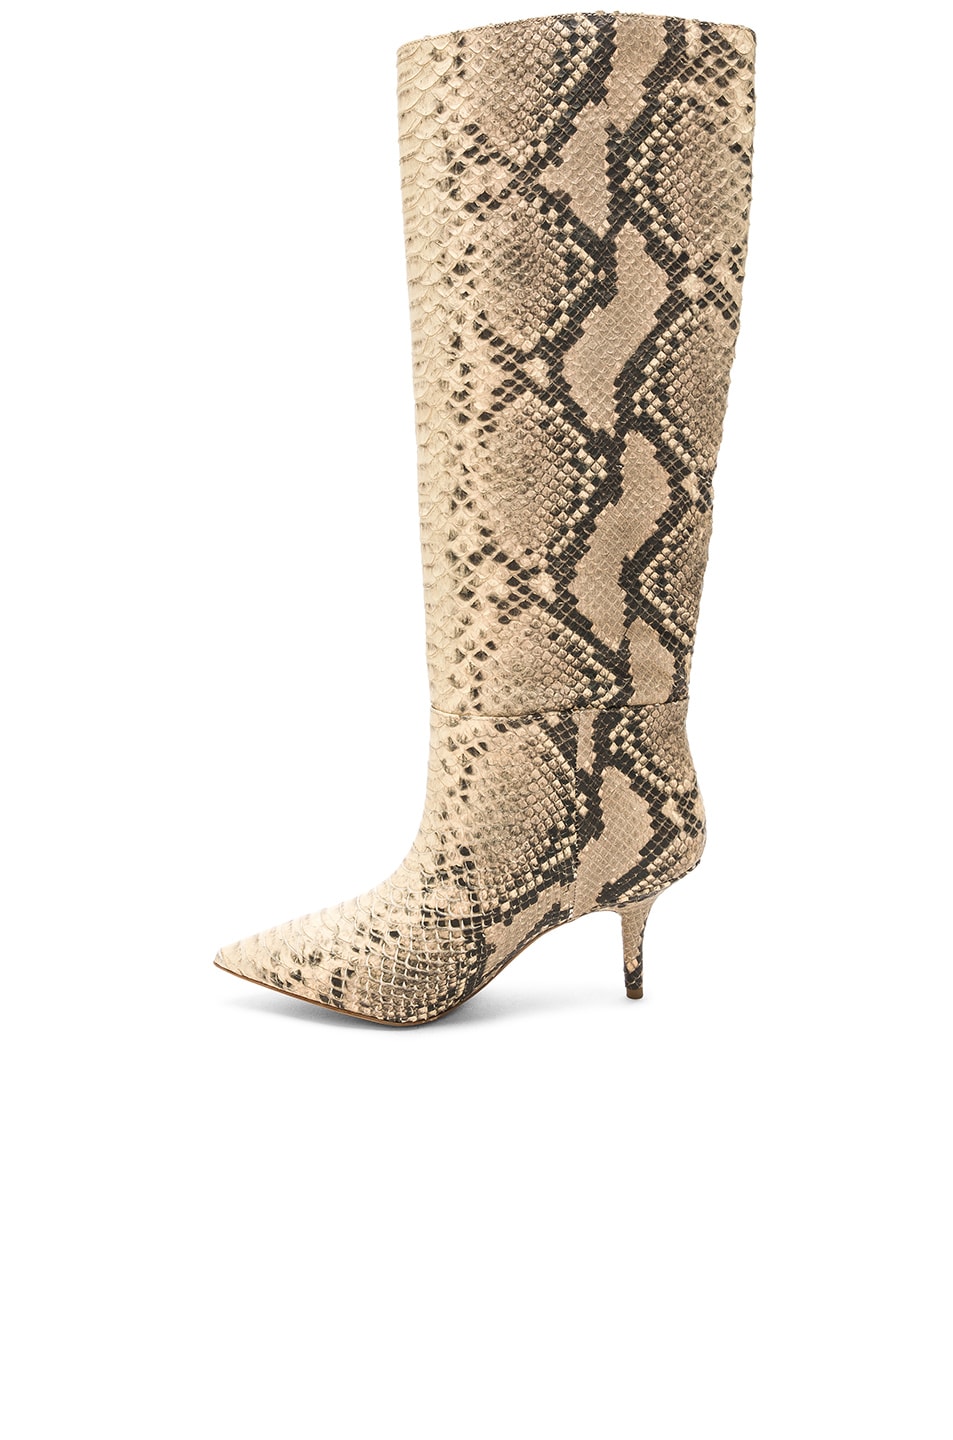 YEEZY Season 7 Python Embossed Knee High Boots in Roccia Mesa | FWRD